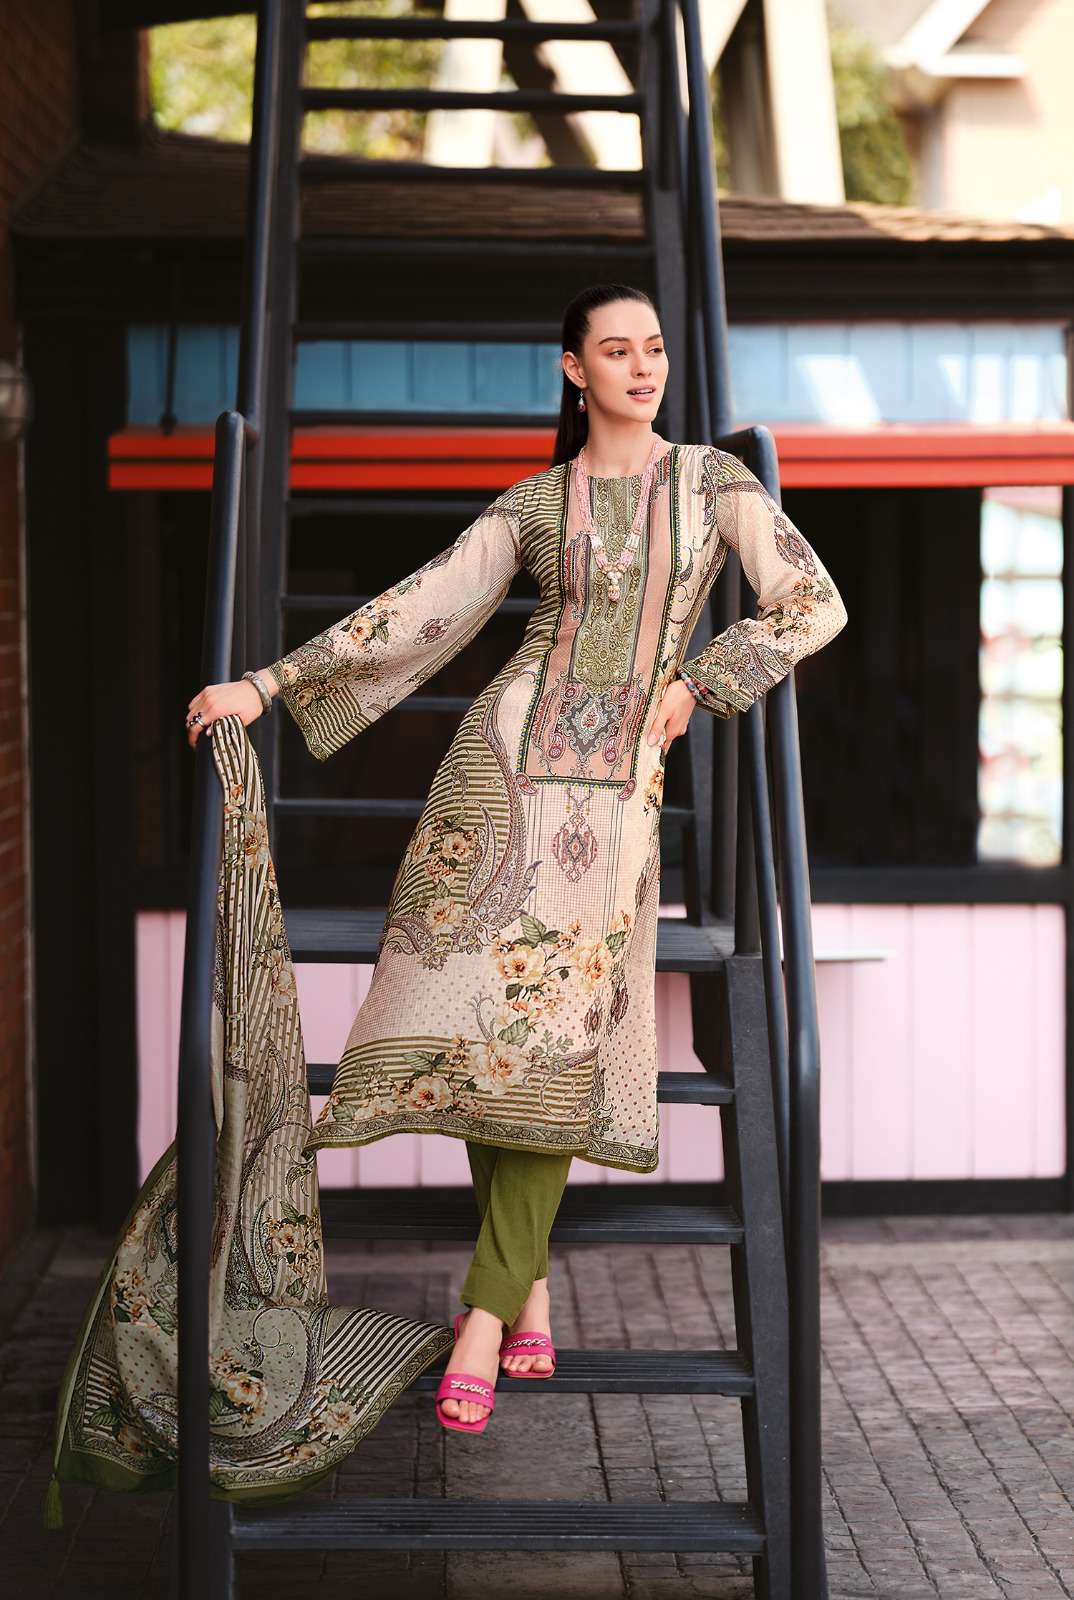 aiqa lifestyle nafeesa 1001-1006 series trendy designer salwar kameez catalogue online dealer surat 